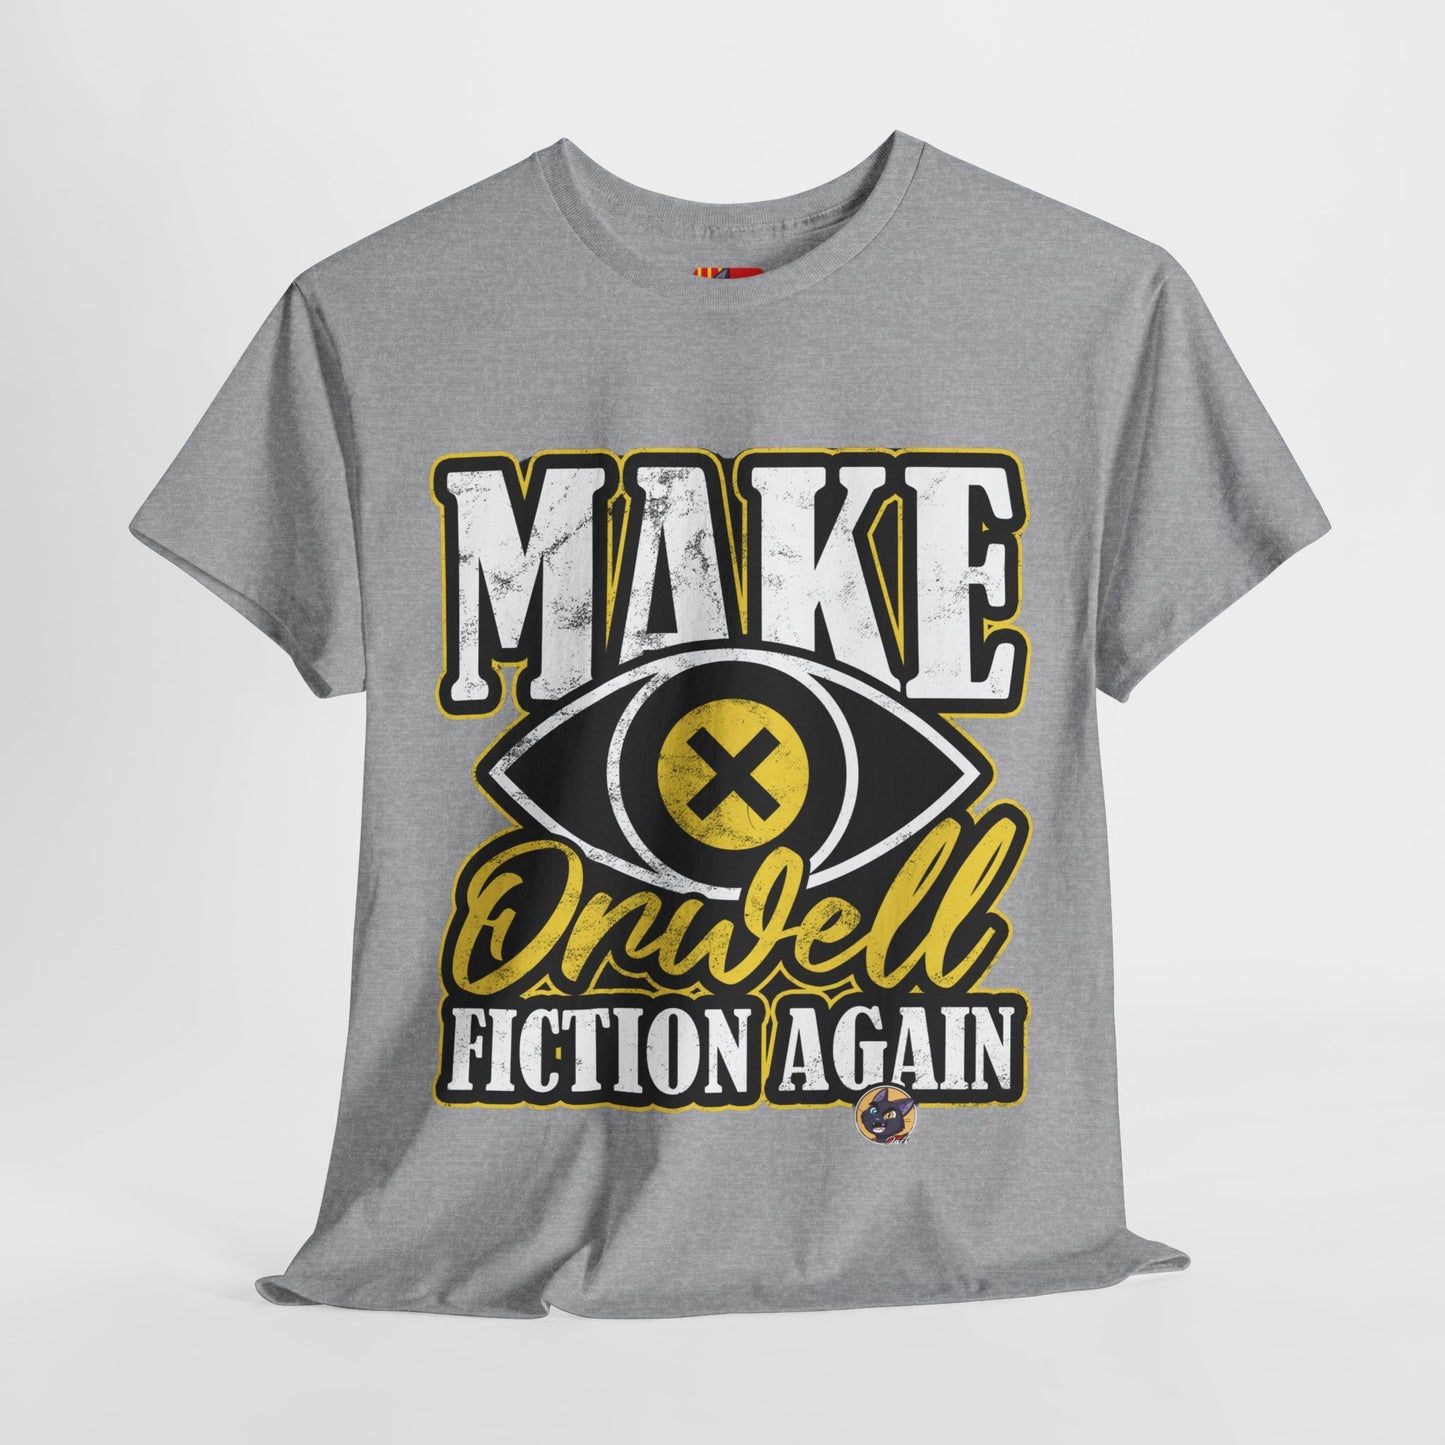 The Free Spirit T-Shirt Make onwell fiction again Jack